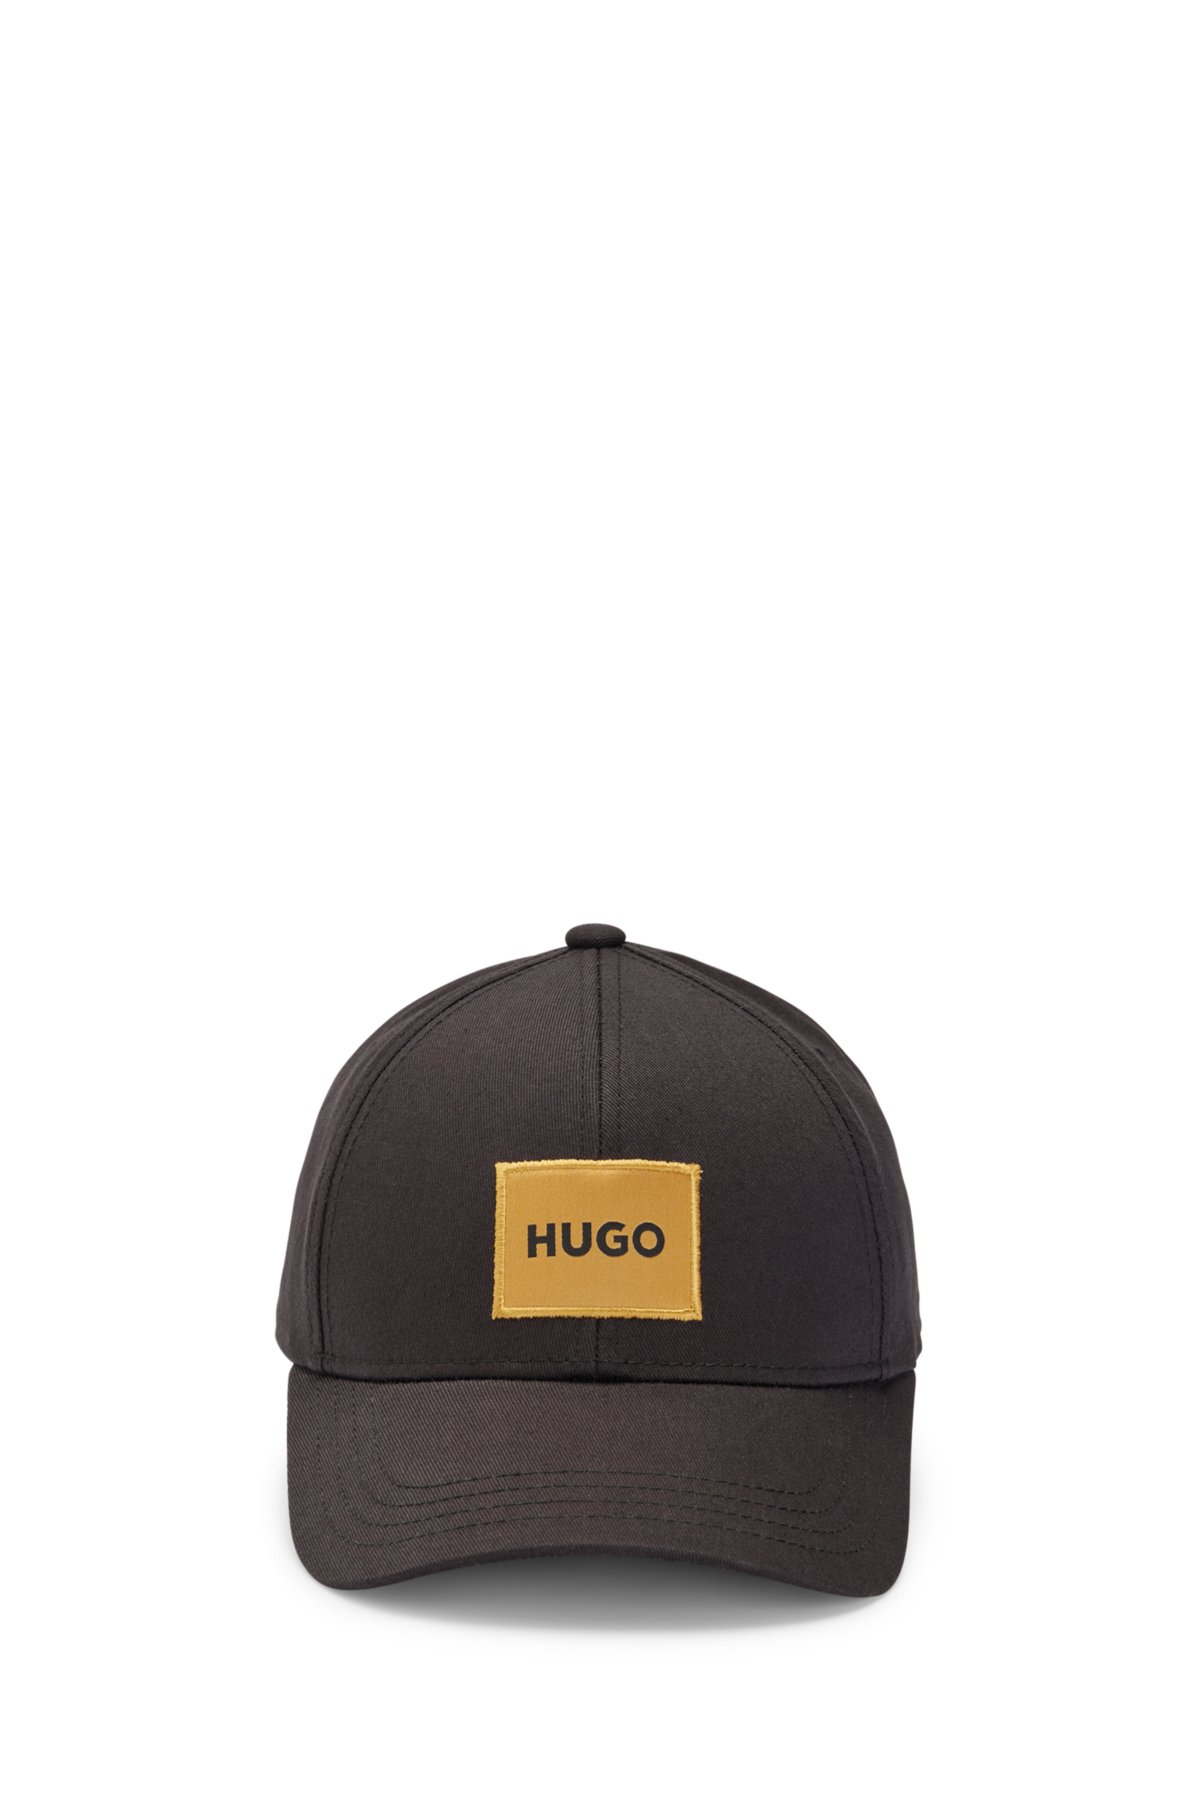 Hugo Boss Cap Black Official Shop